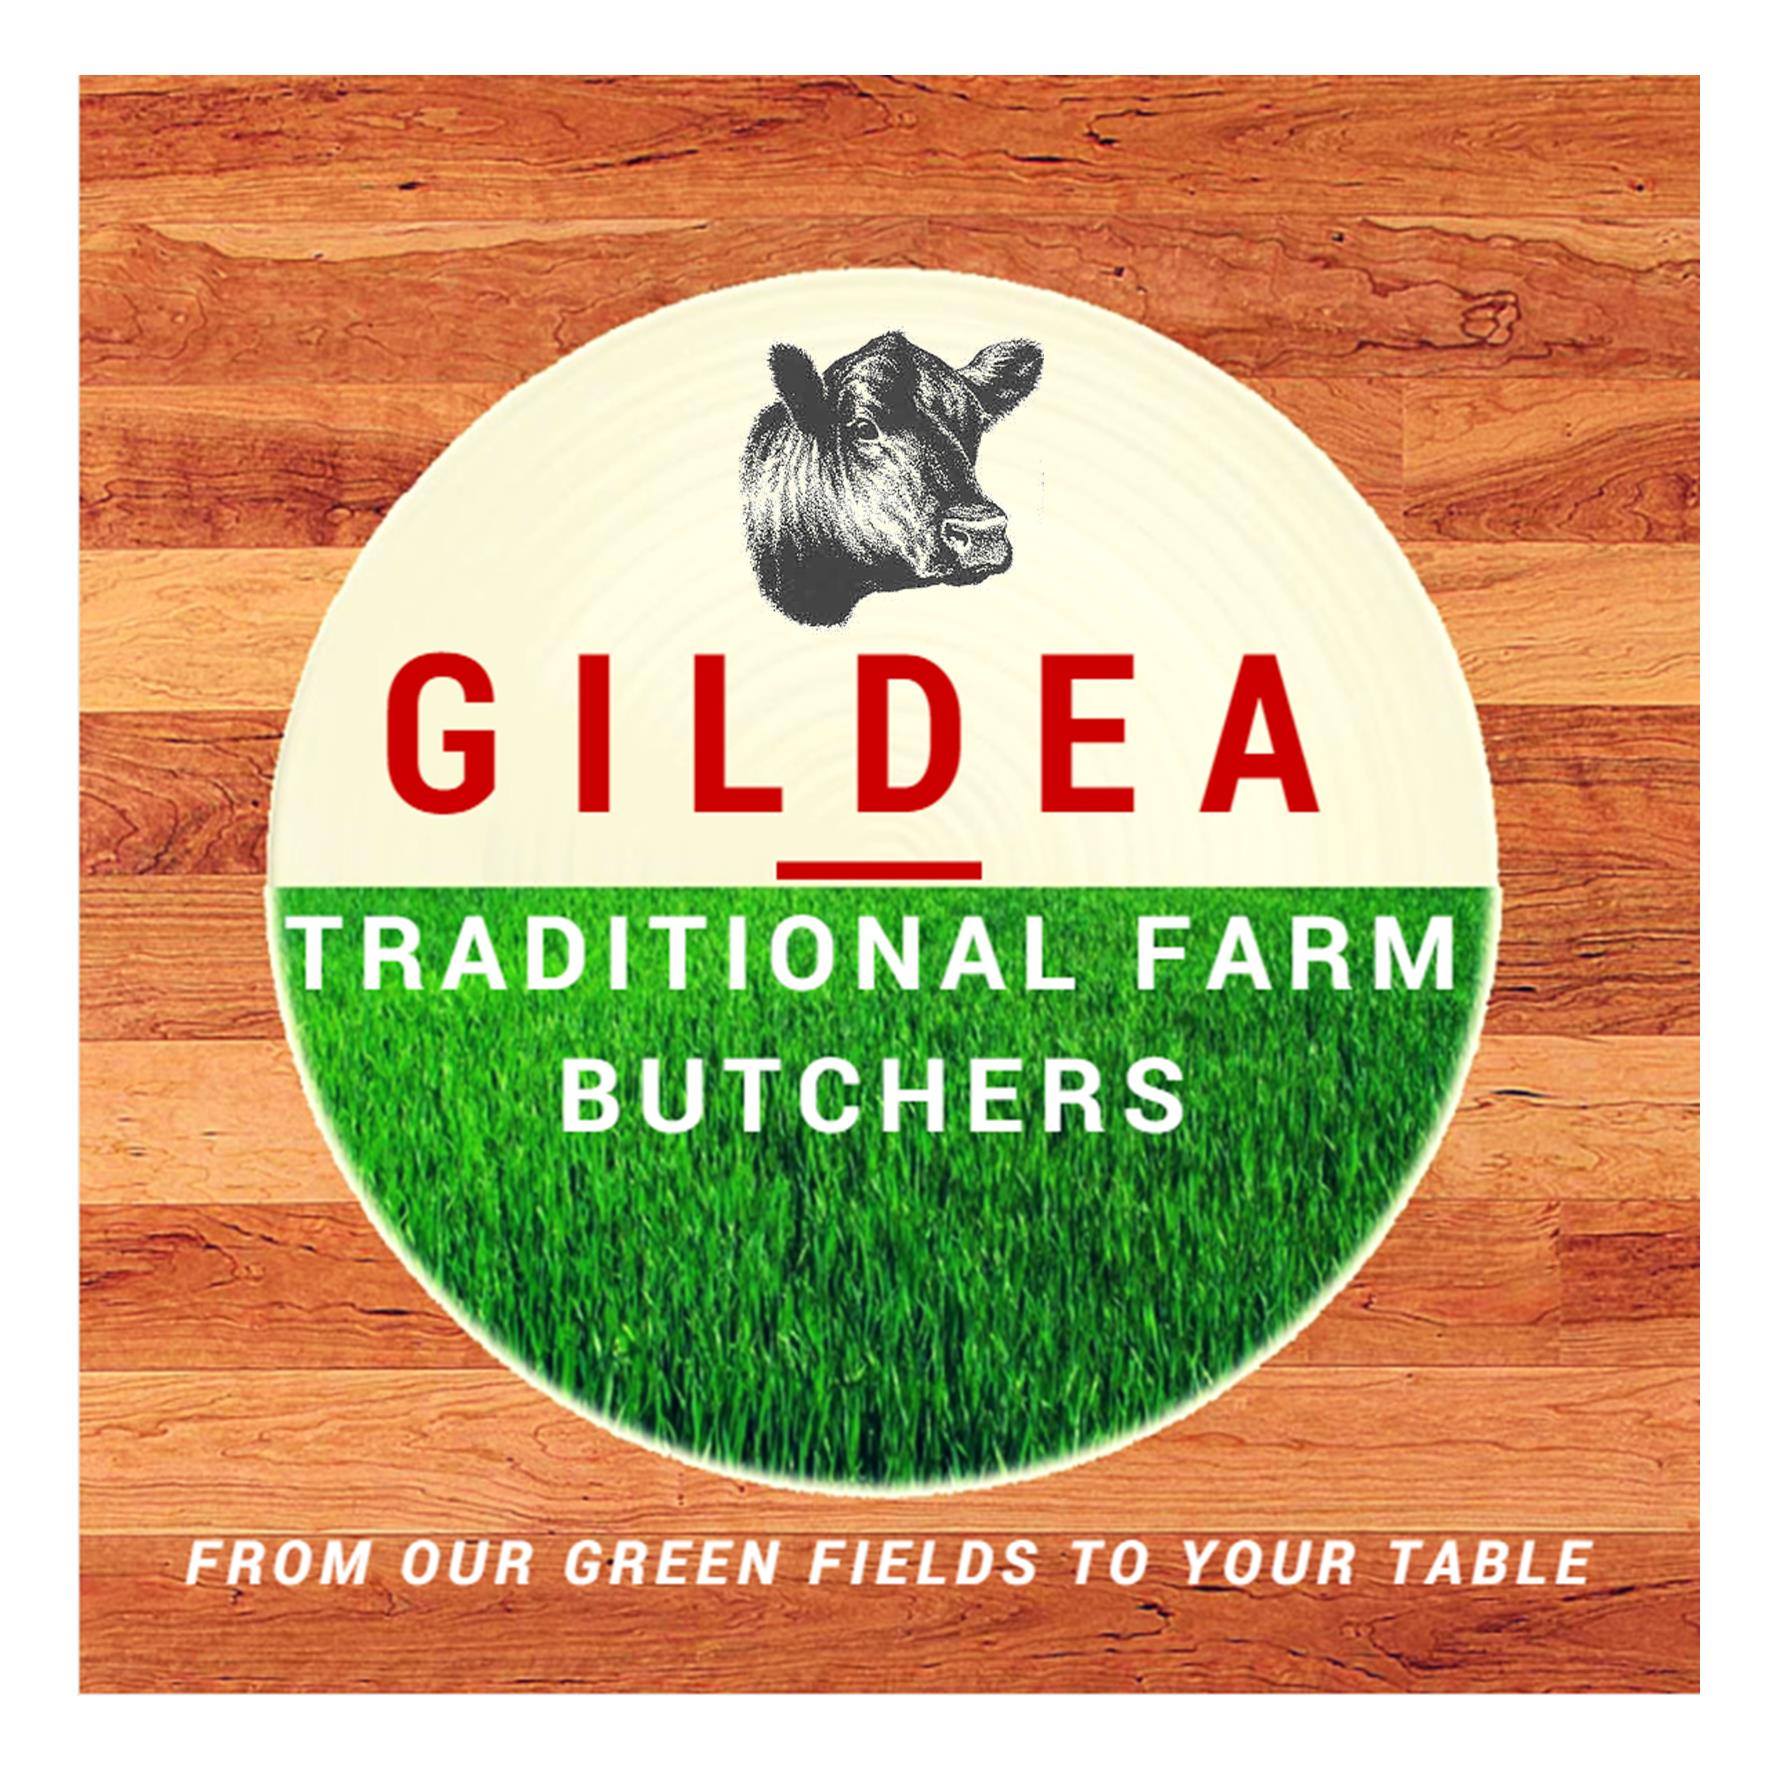 Gildea Butchers